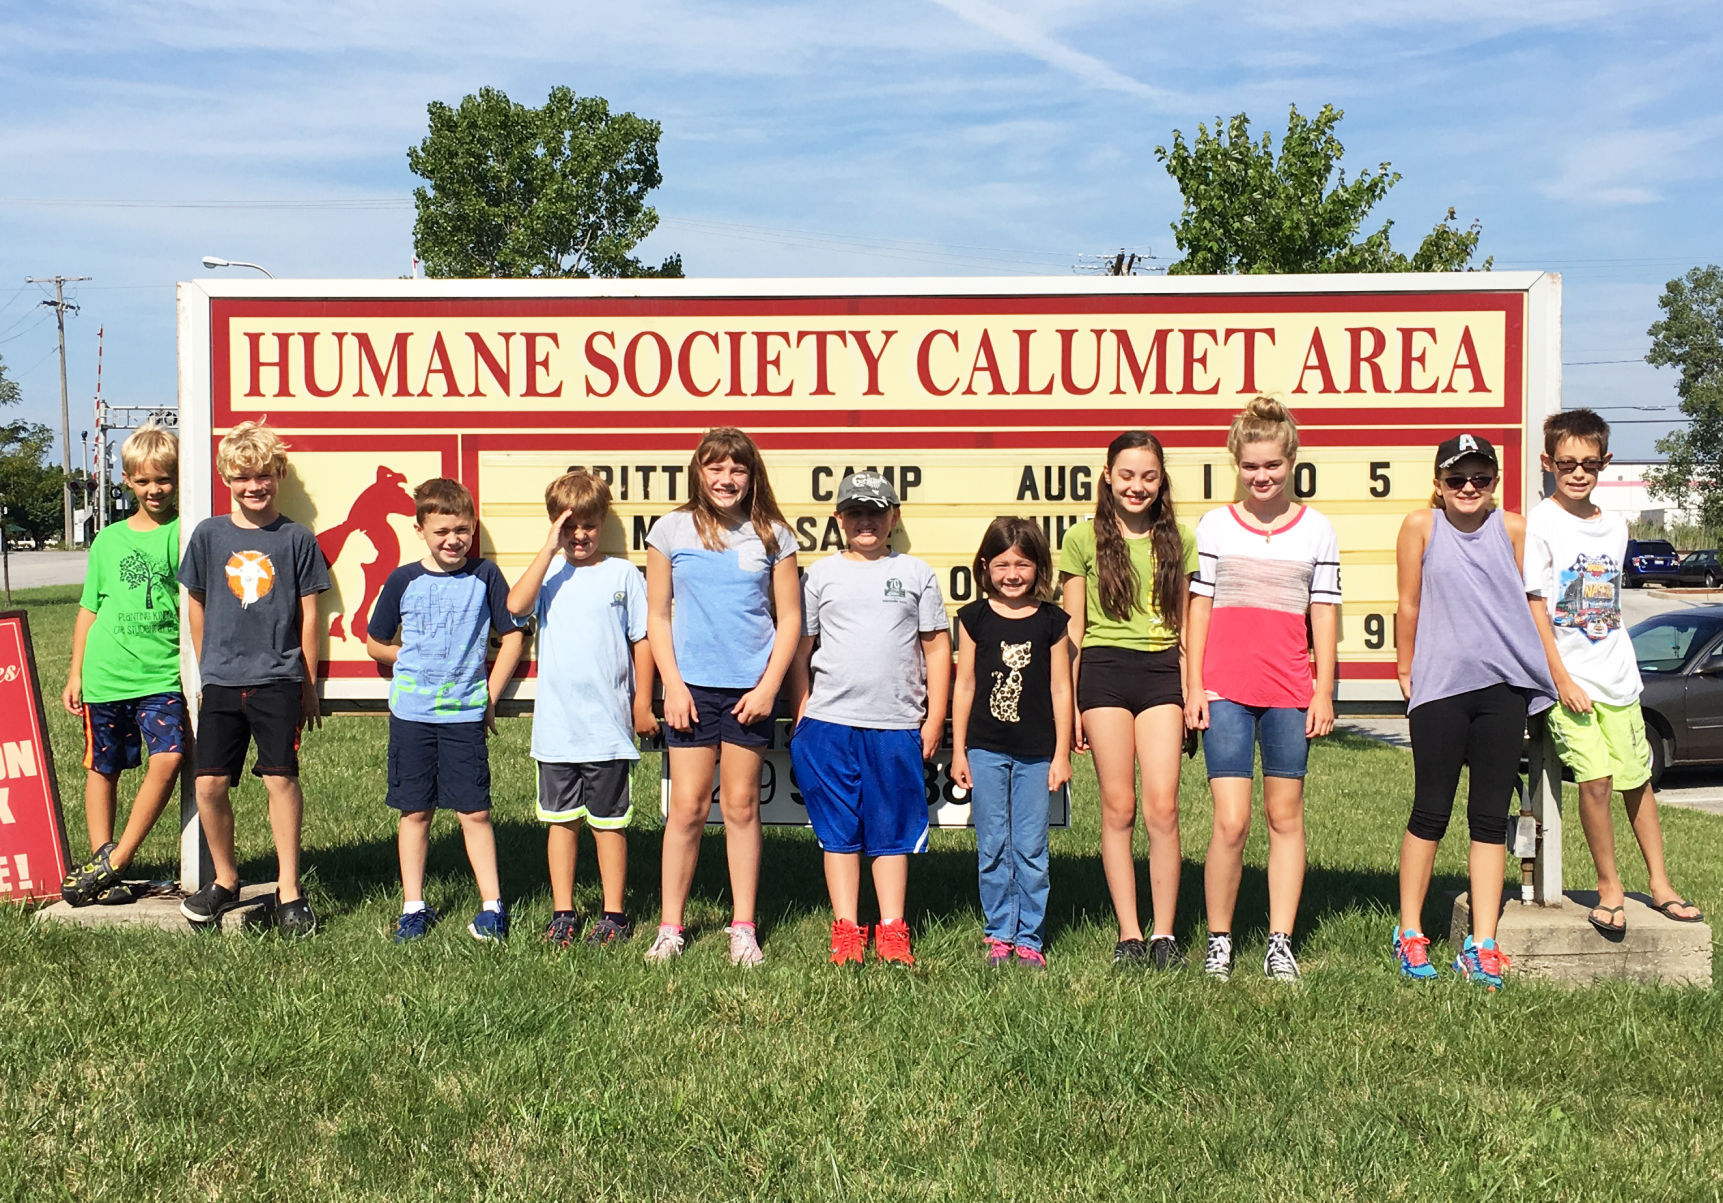 Humane Society Calumet Area offers kids 